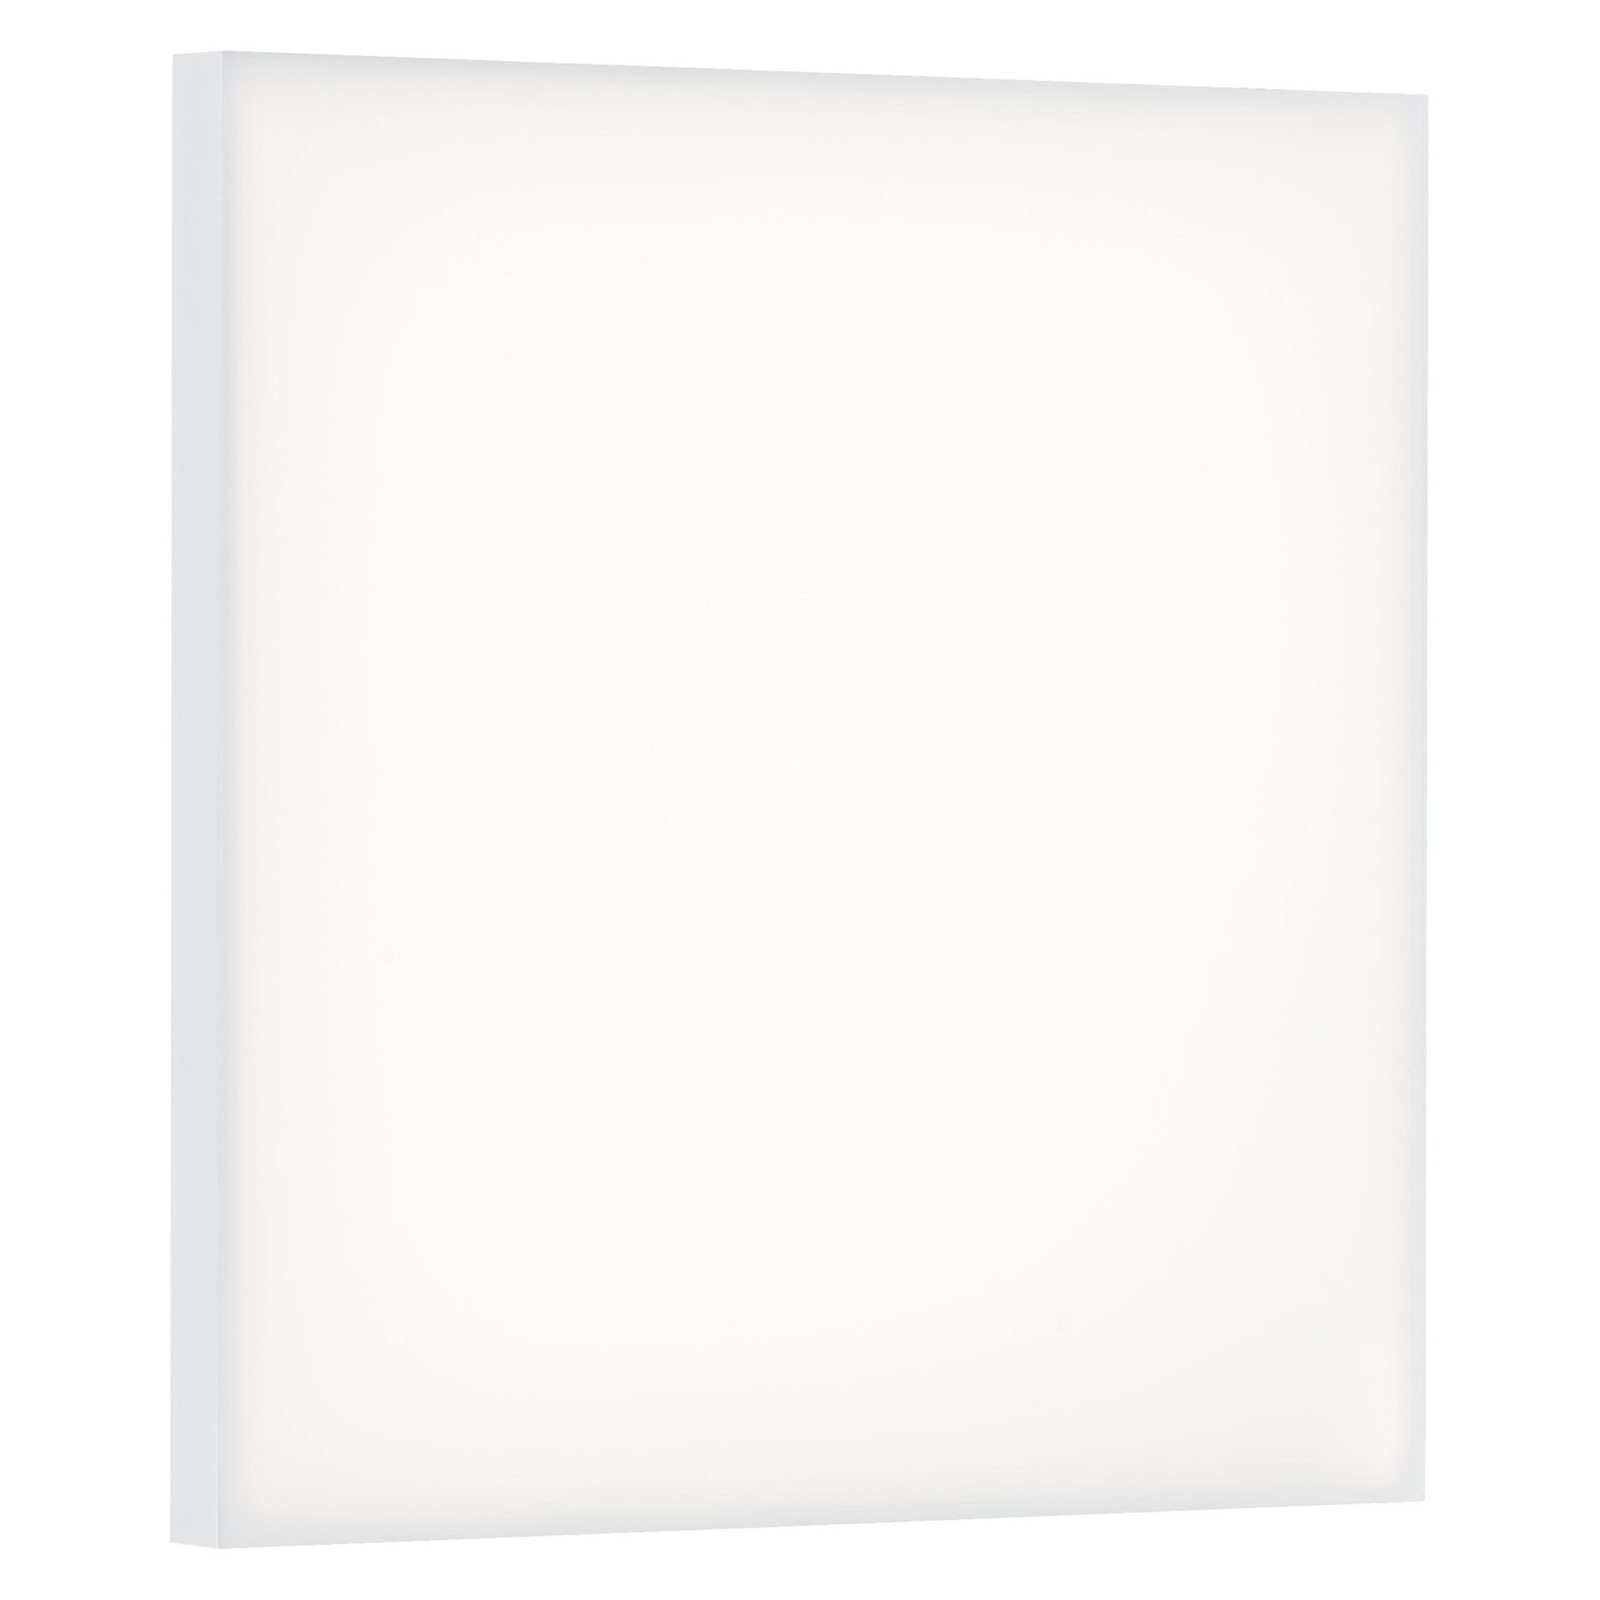 Paulmann Velora LED panel 3-level dim 29.5x29.5 cm